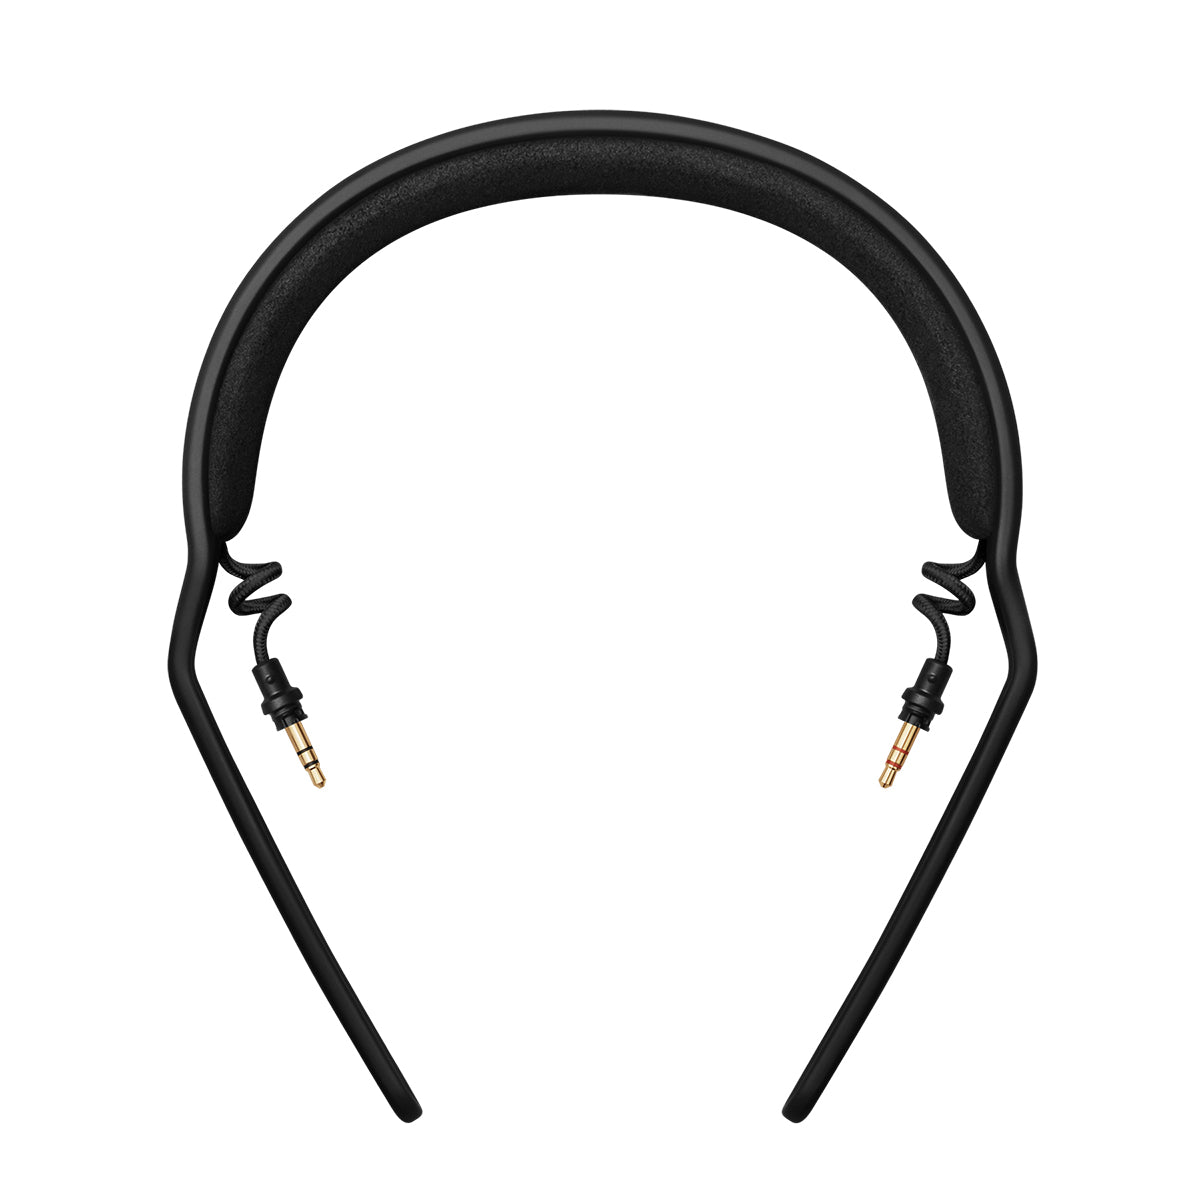 AIAIAI TMA-2 - H04 Headband, High Comfort Microfiber (2021)